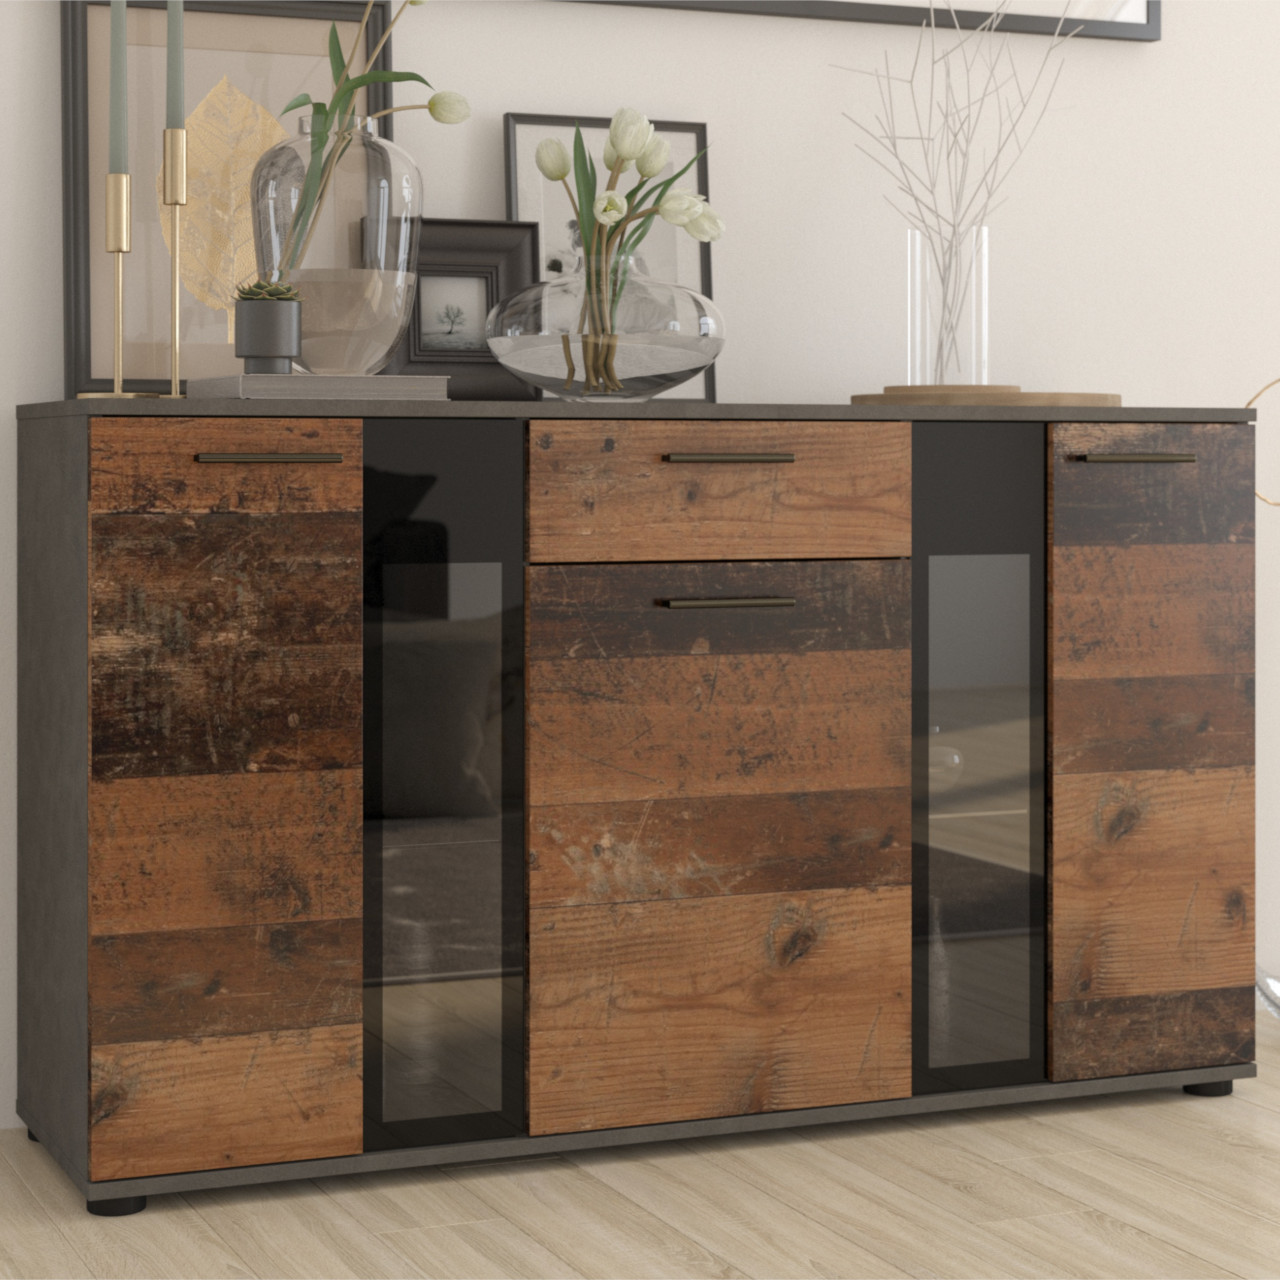 Storage cabinet SALSA / TANGO matera / old style